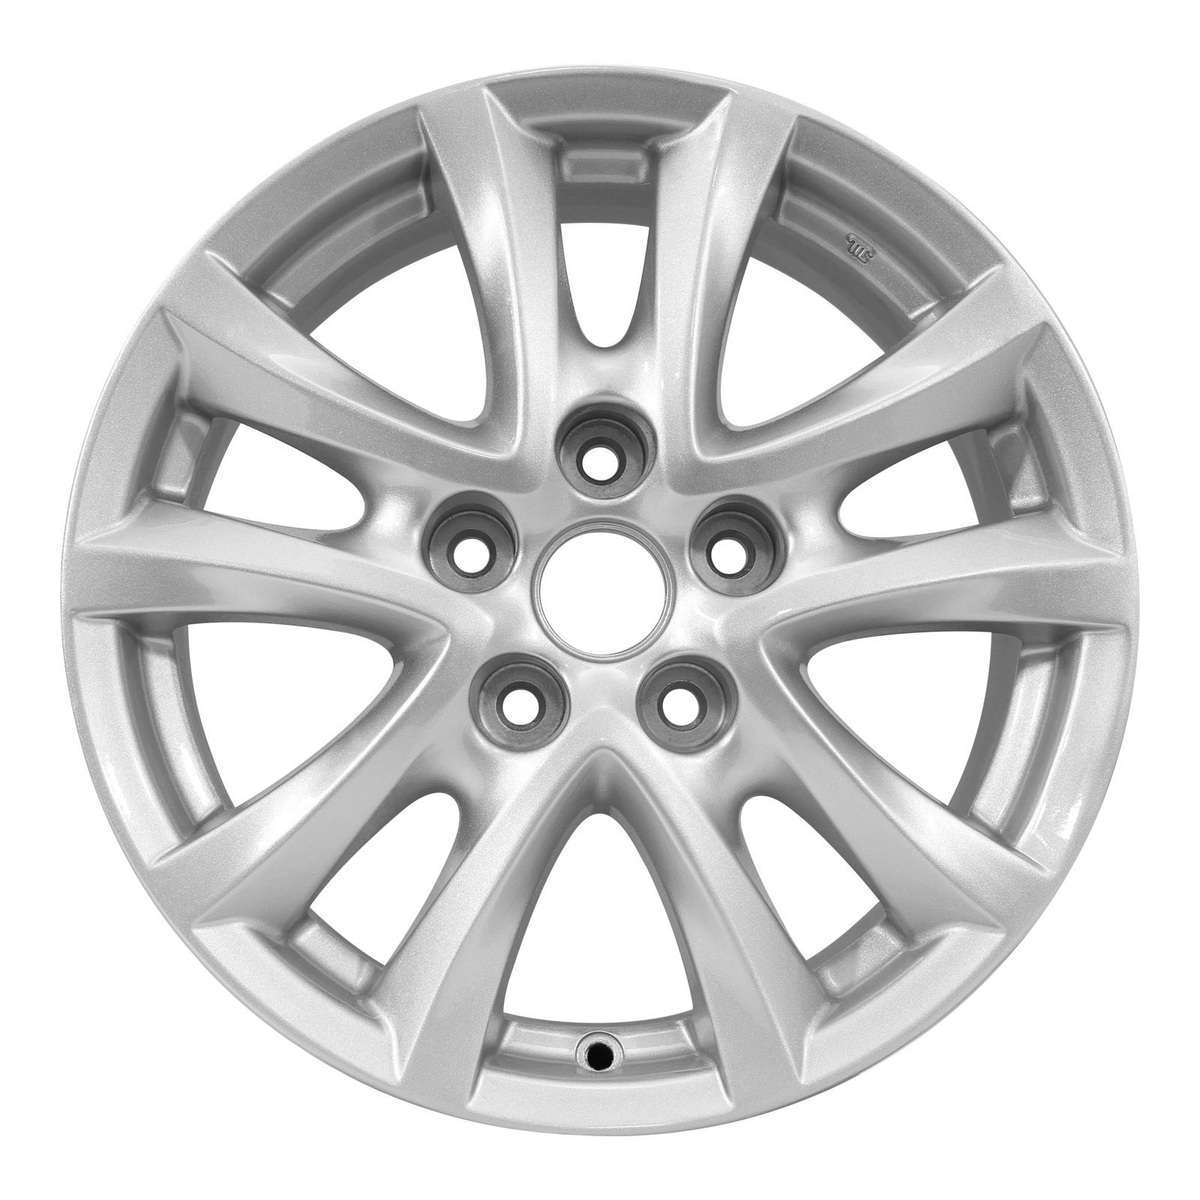 2018 Mazda 3 New 16" Replacement Wheel Rim RW64961S